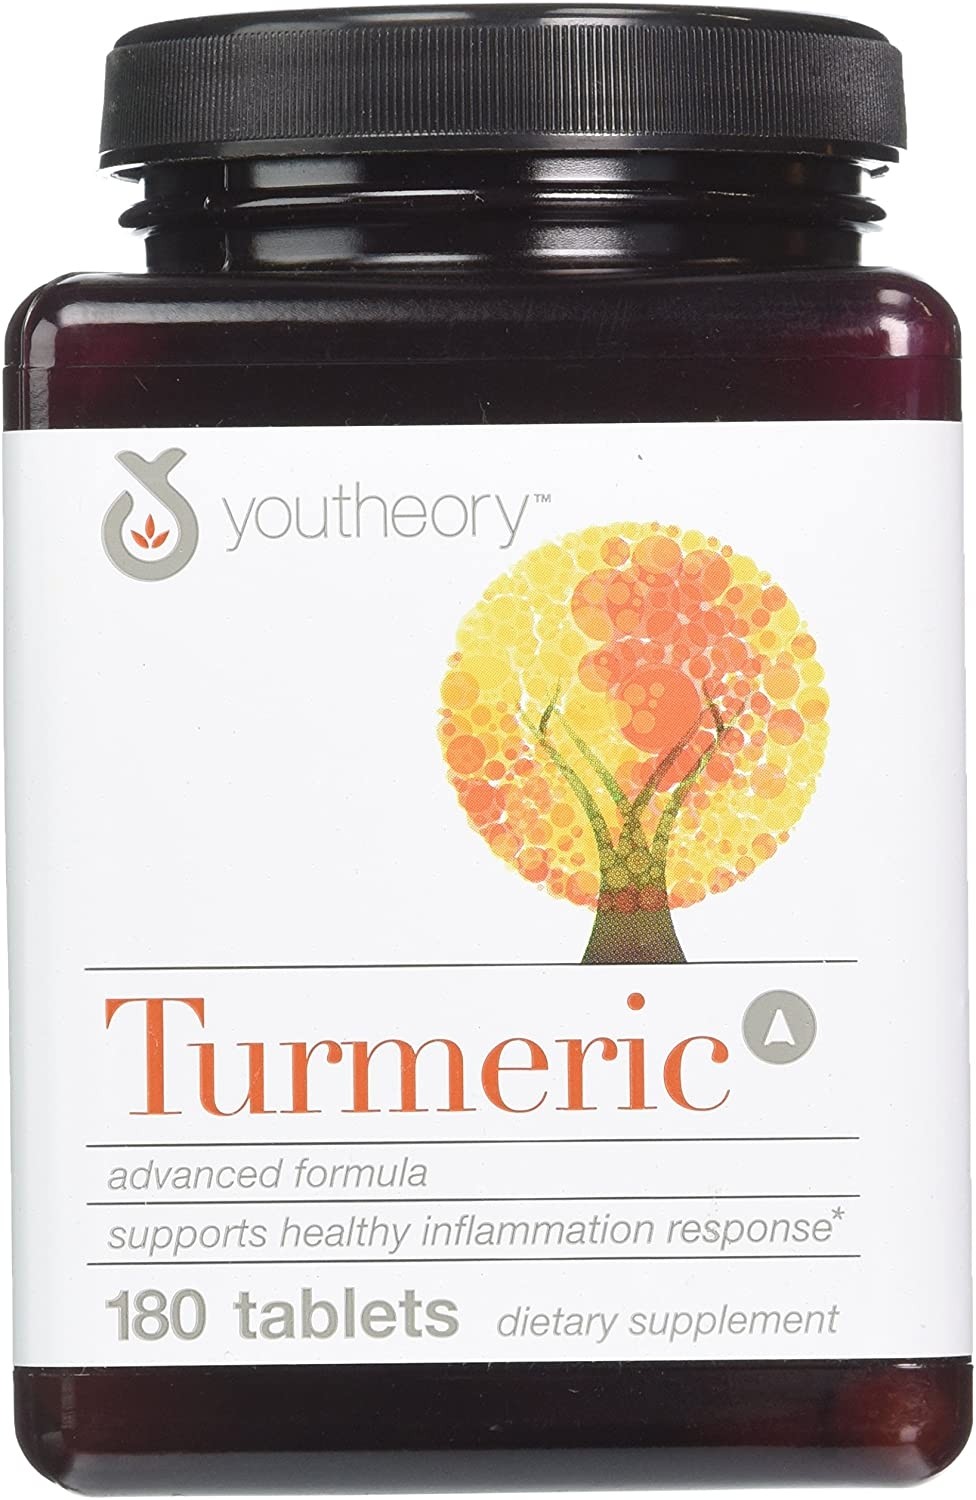 Youtheory Turmeric 180 Tablets Advanced Formula